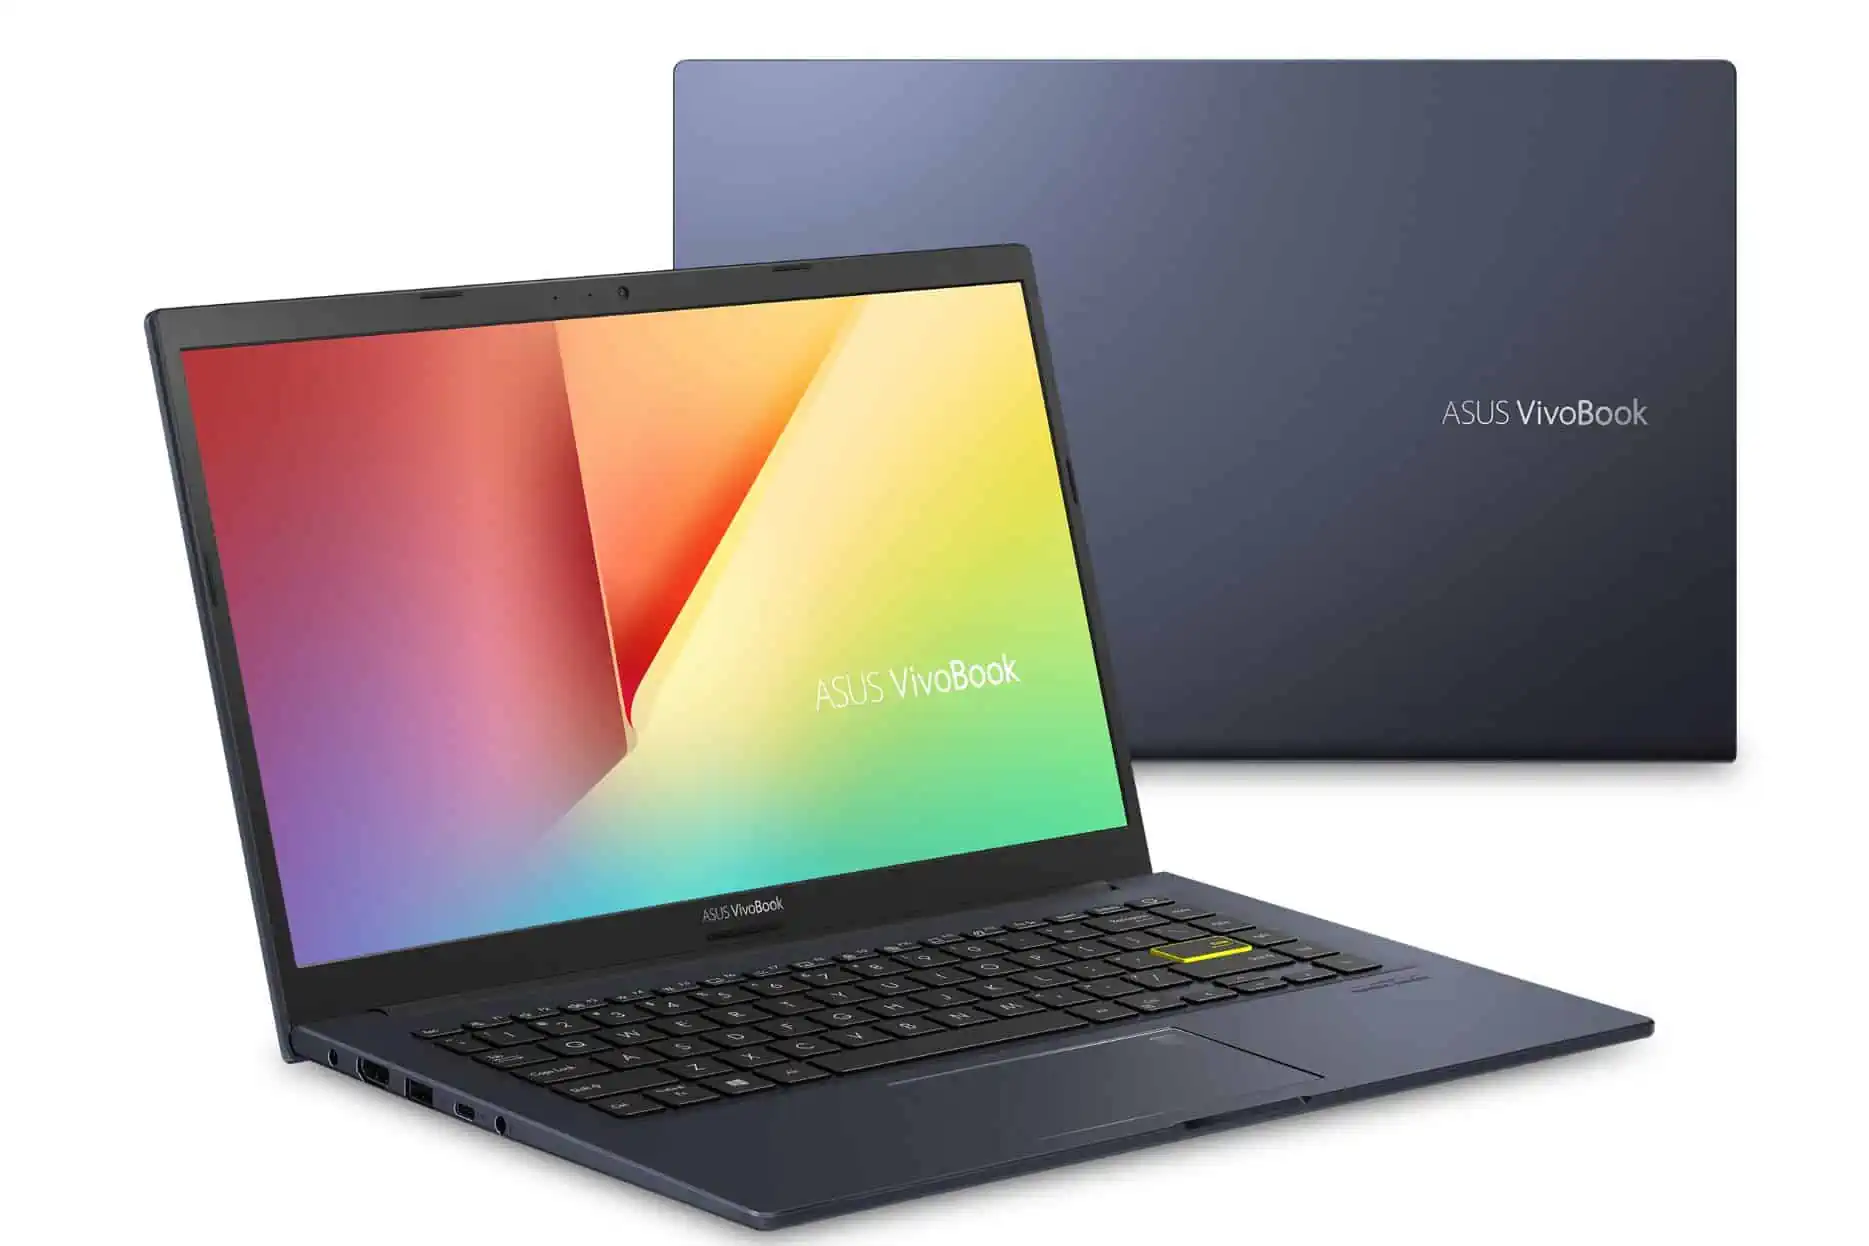 Deal Alert ASUS VivoBook 14 laptop with full HD display, AMD Ryzen 5